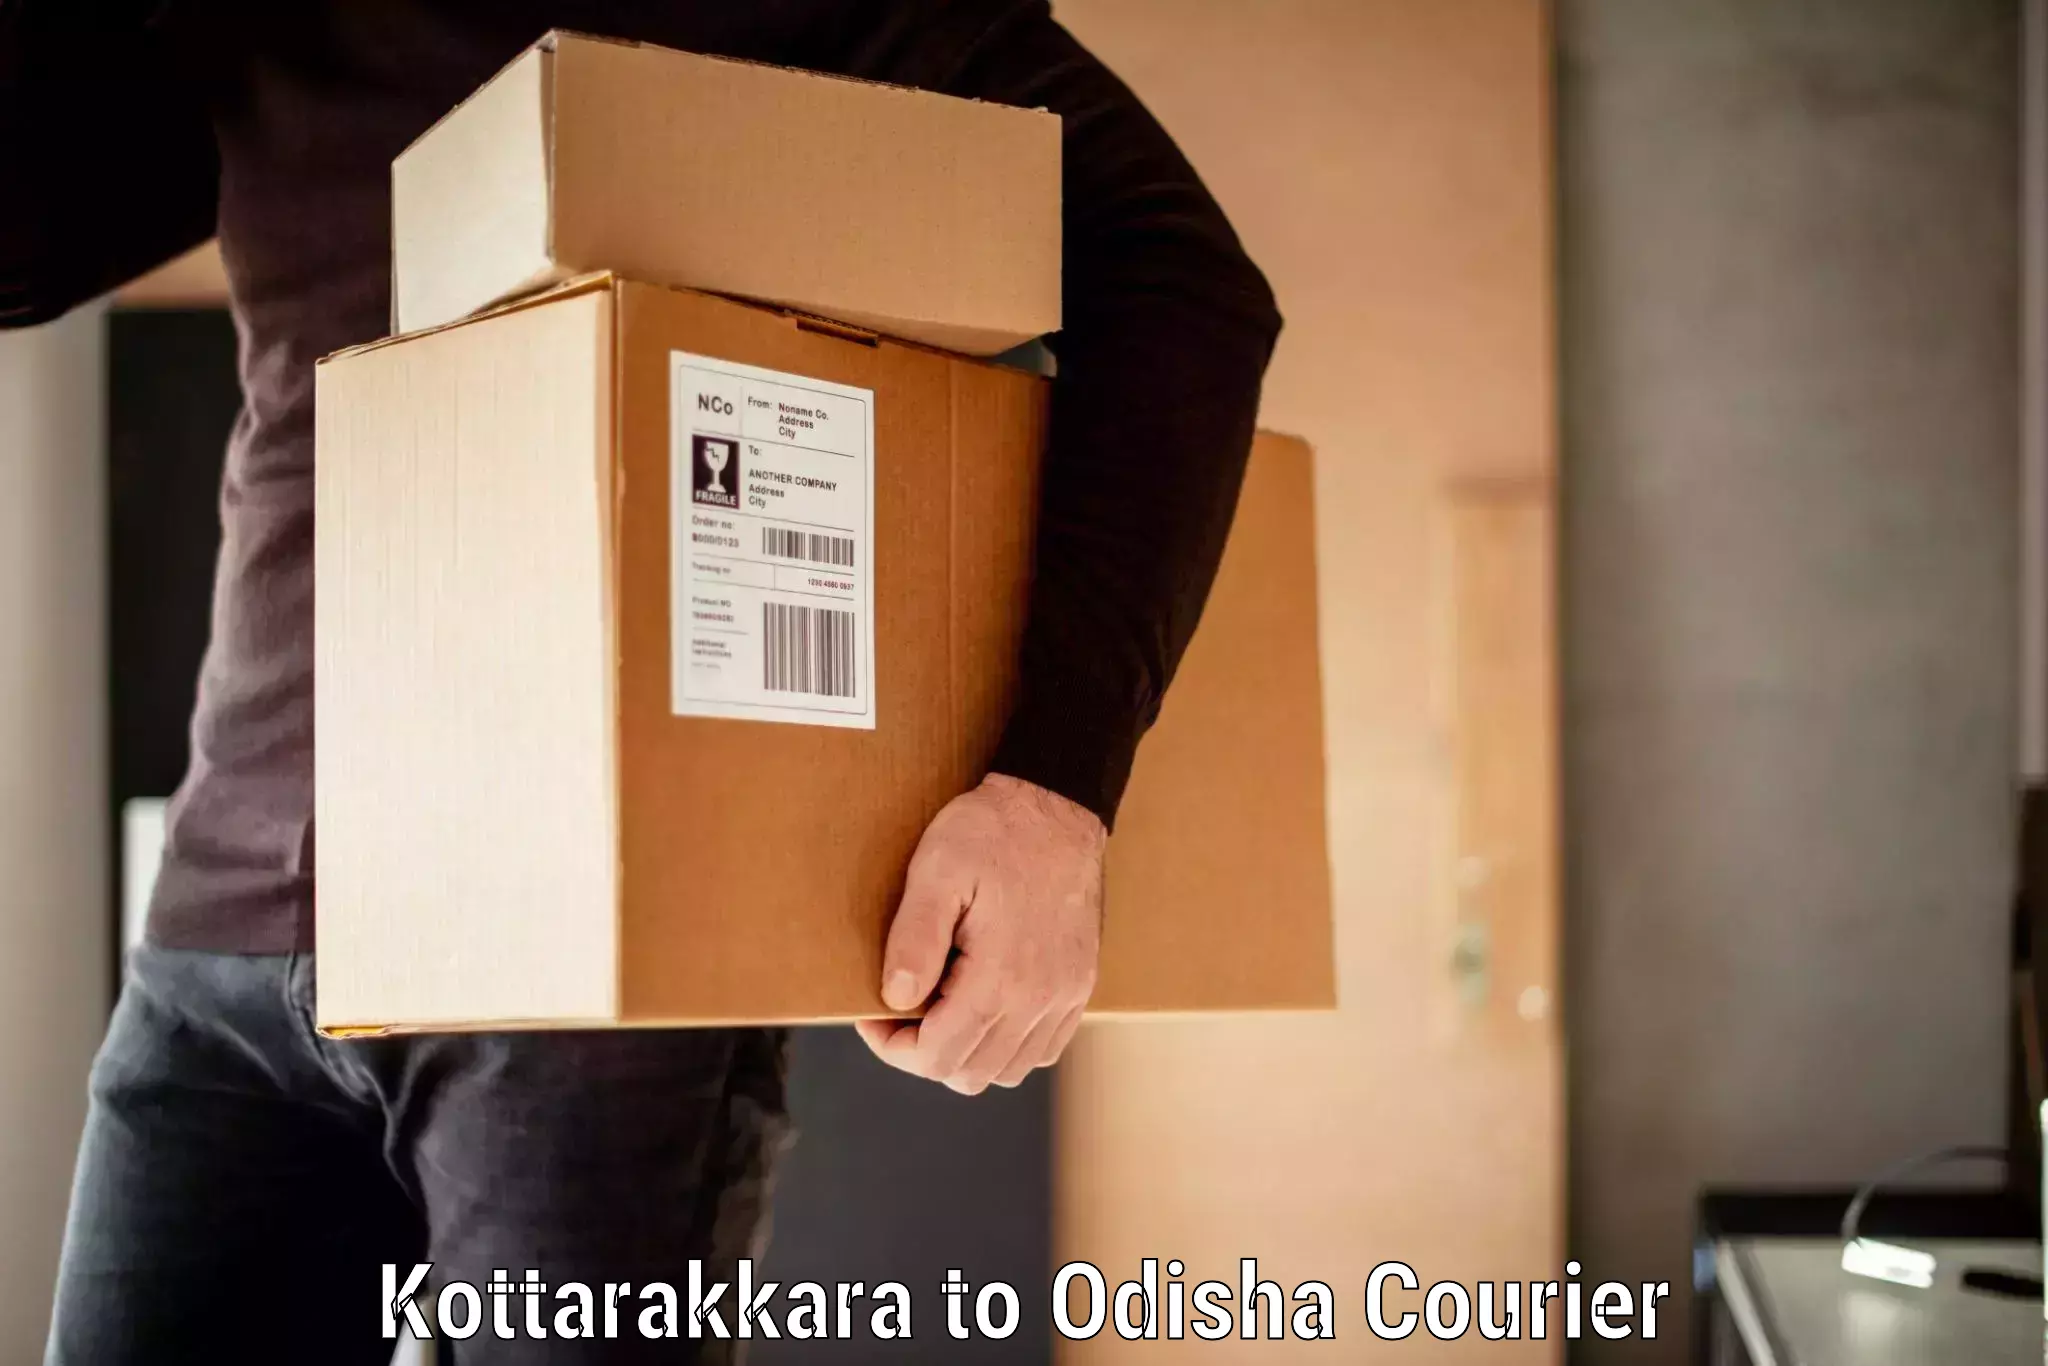 Baggage transport professionals Kottarakkara to Telkoi